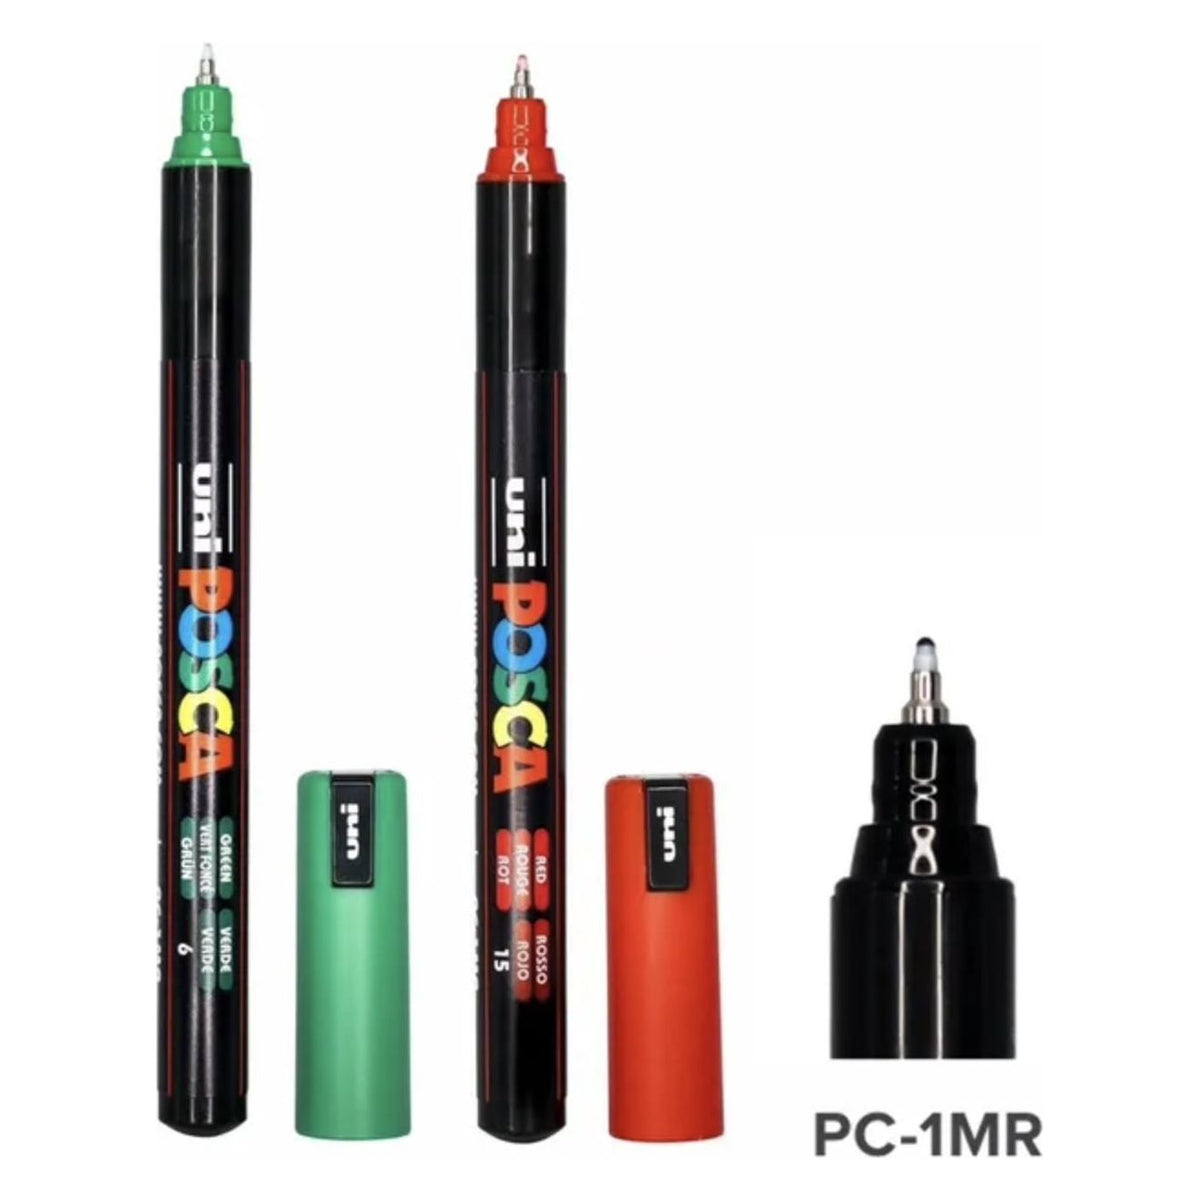 POSCA Fine PC-3M Art Paint Marker Pens Gift Set of 4 Red Tones